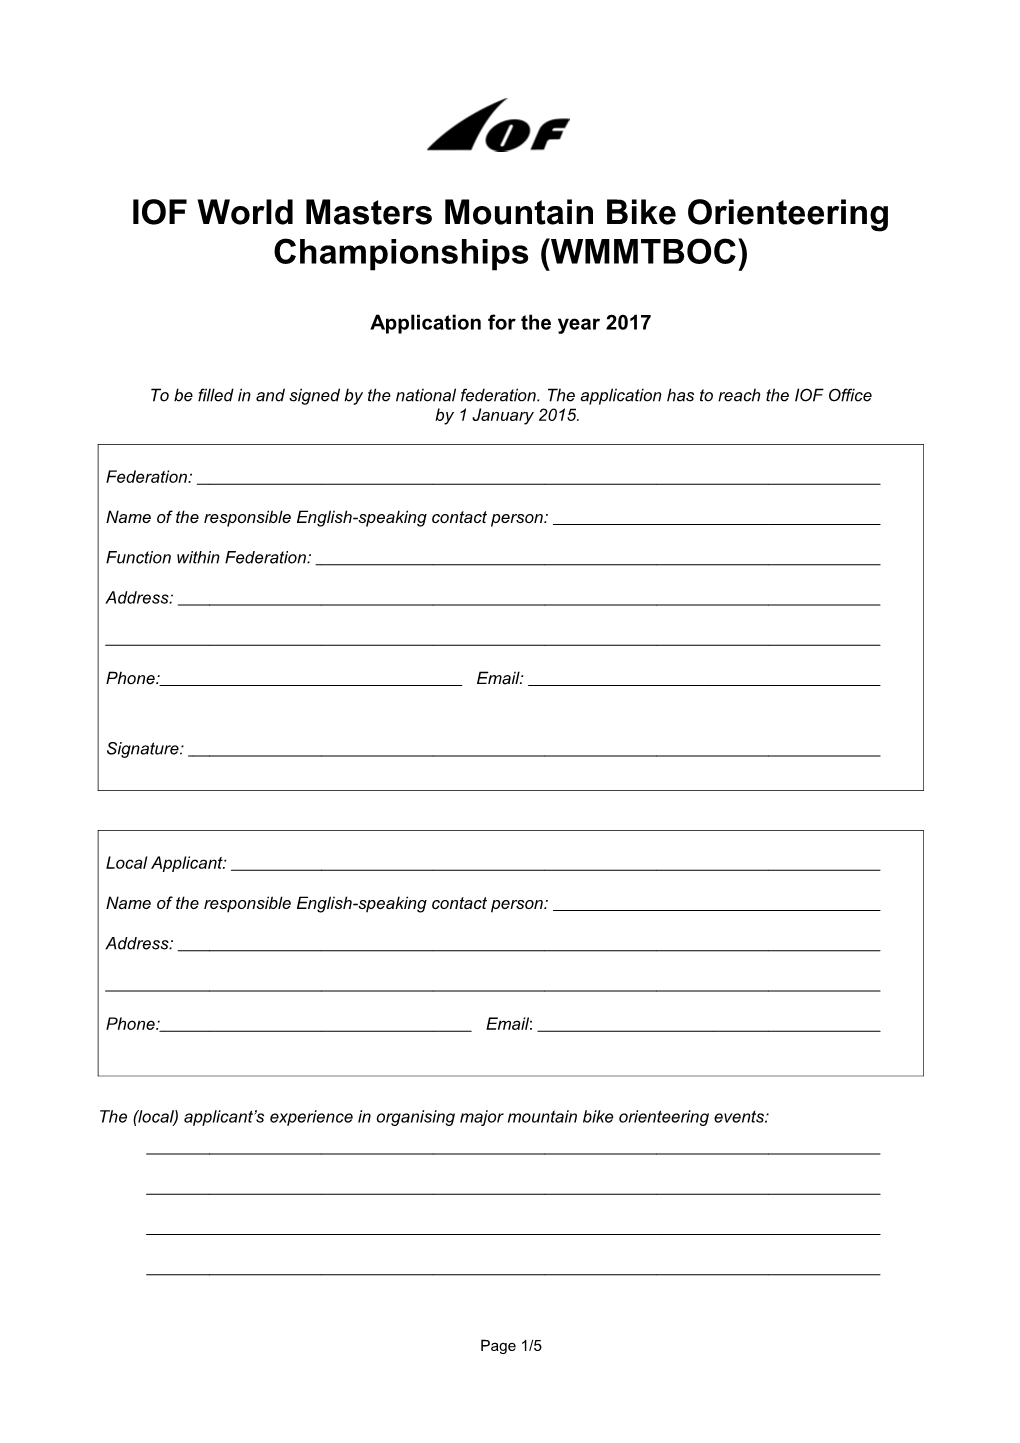 IOF World Masters Mountain Bike Orienteering Championships (WMMTBOC)